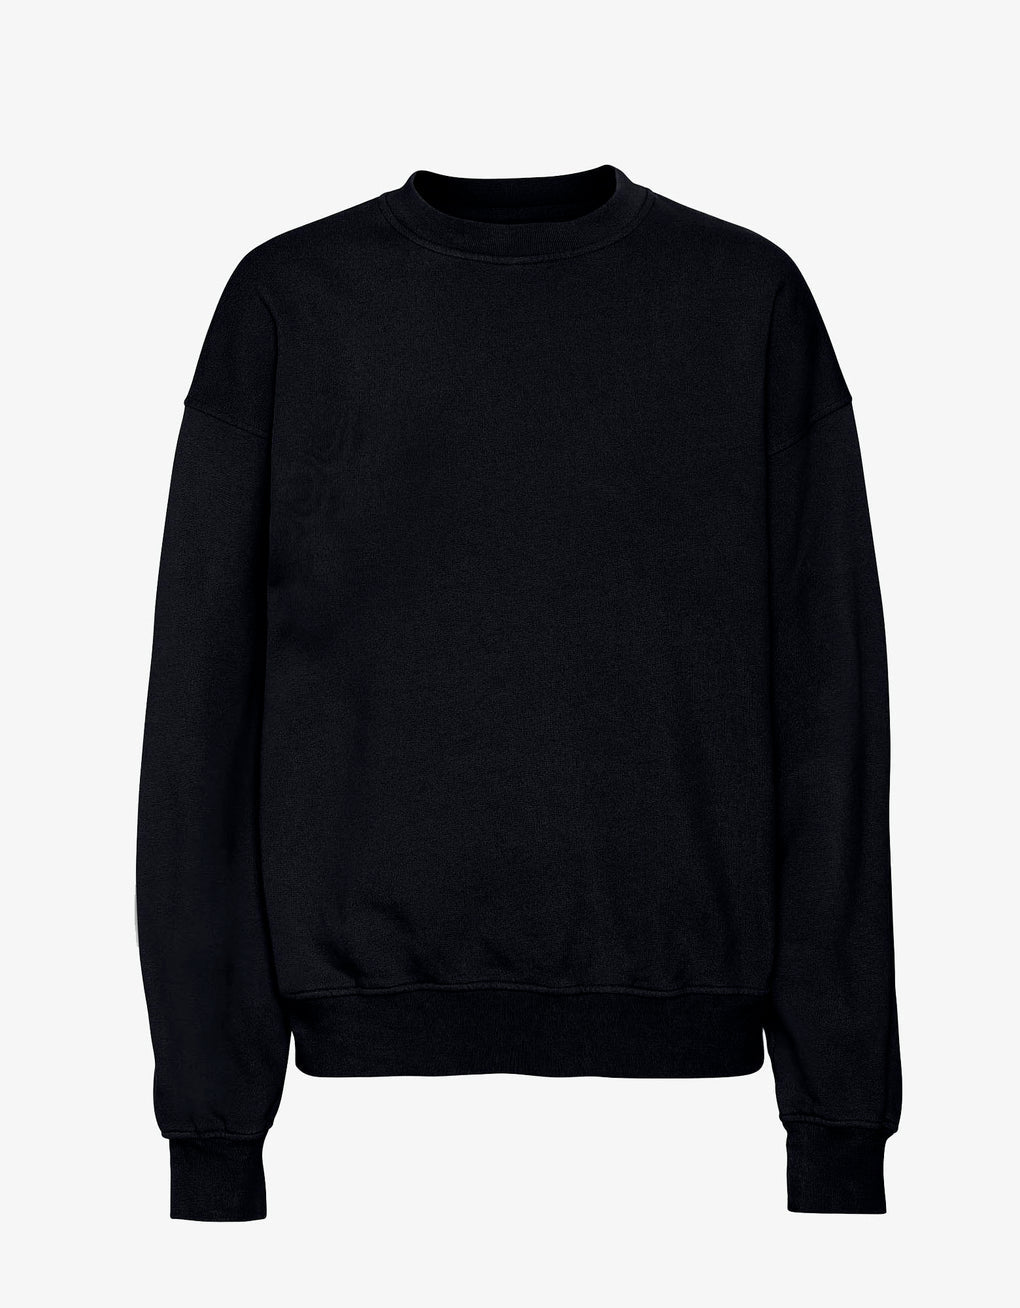 Organic oversized crew sweater in deep black